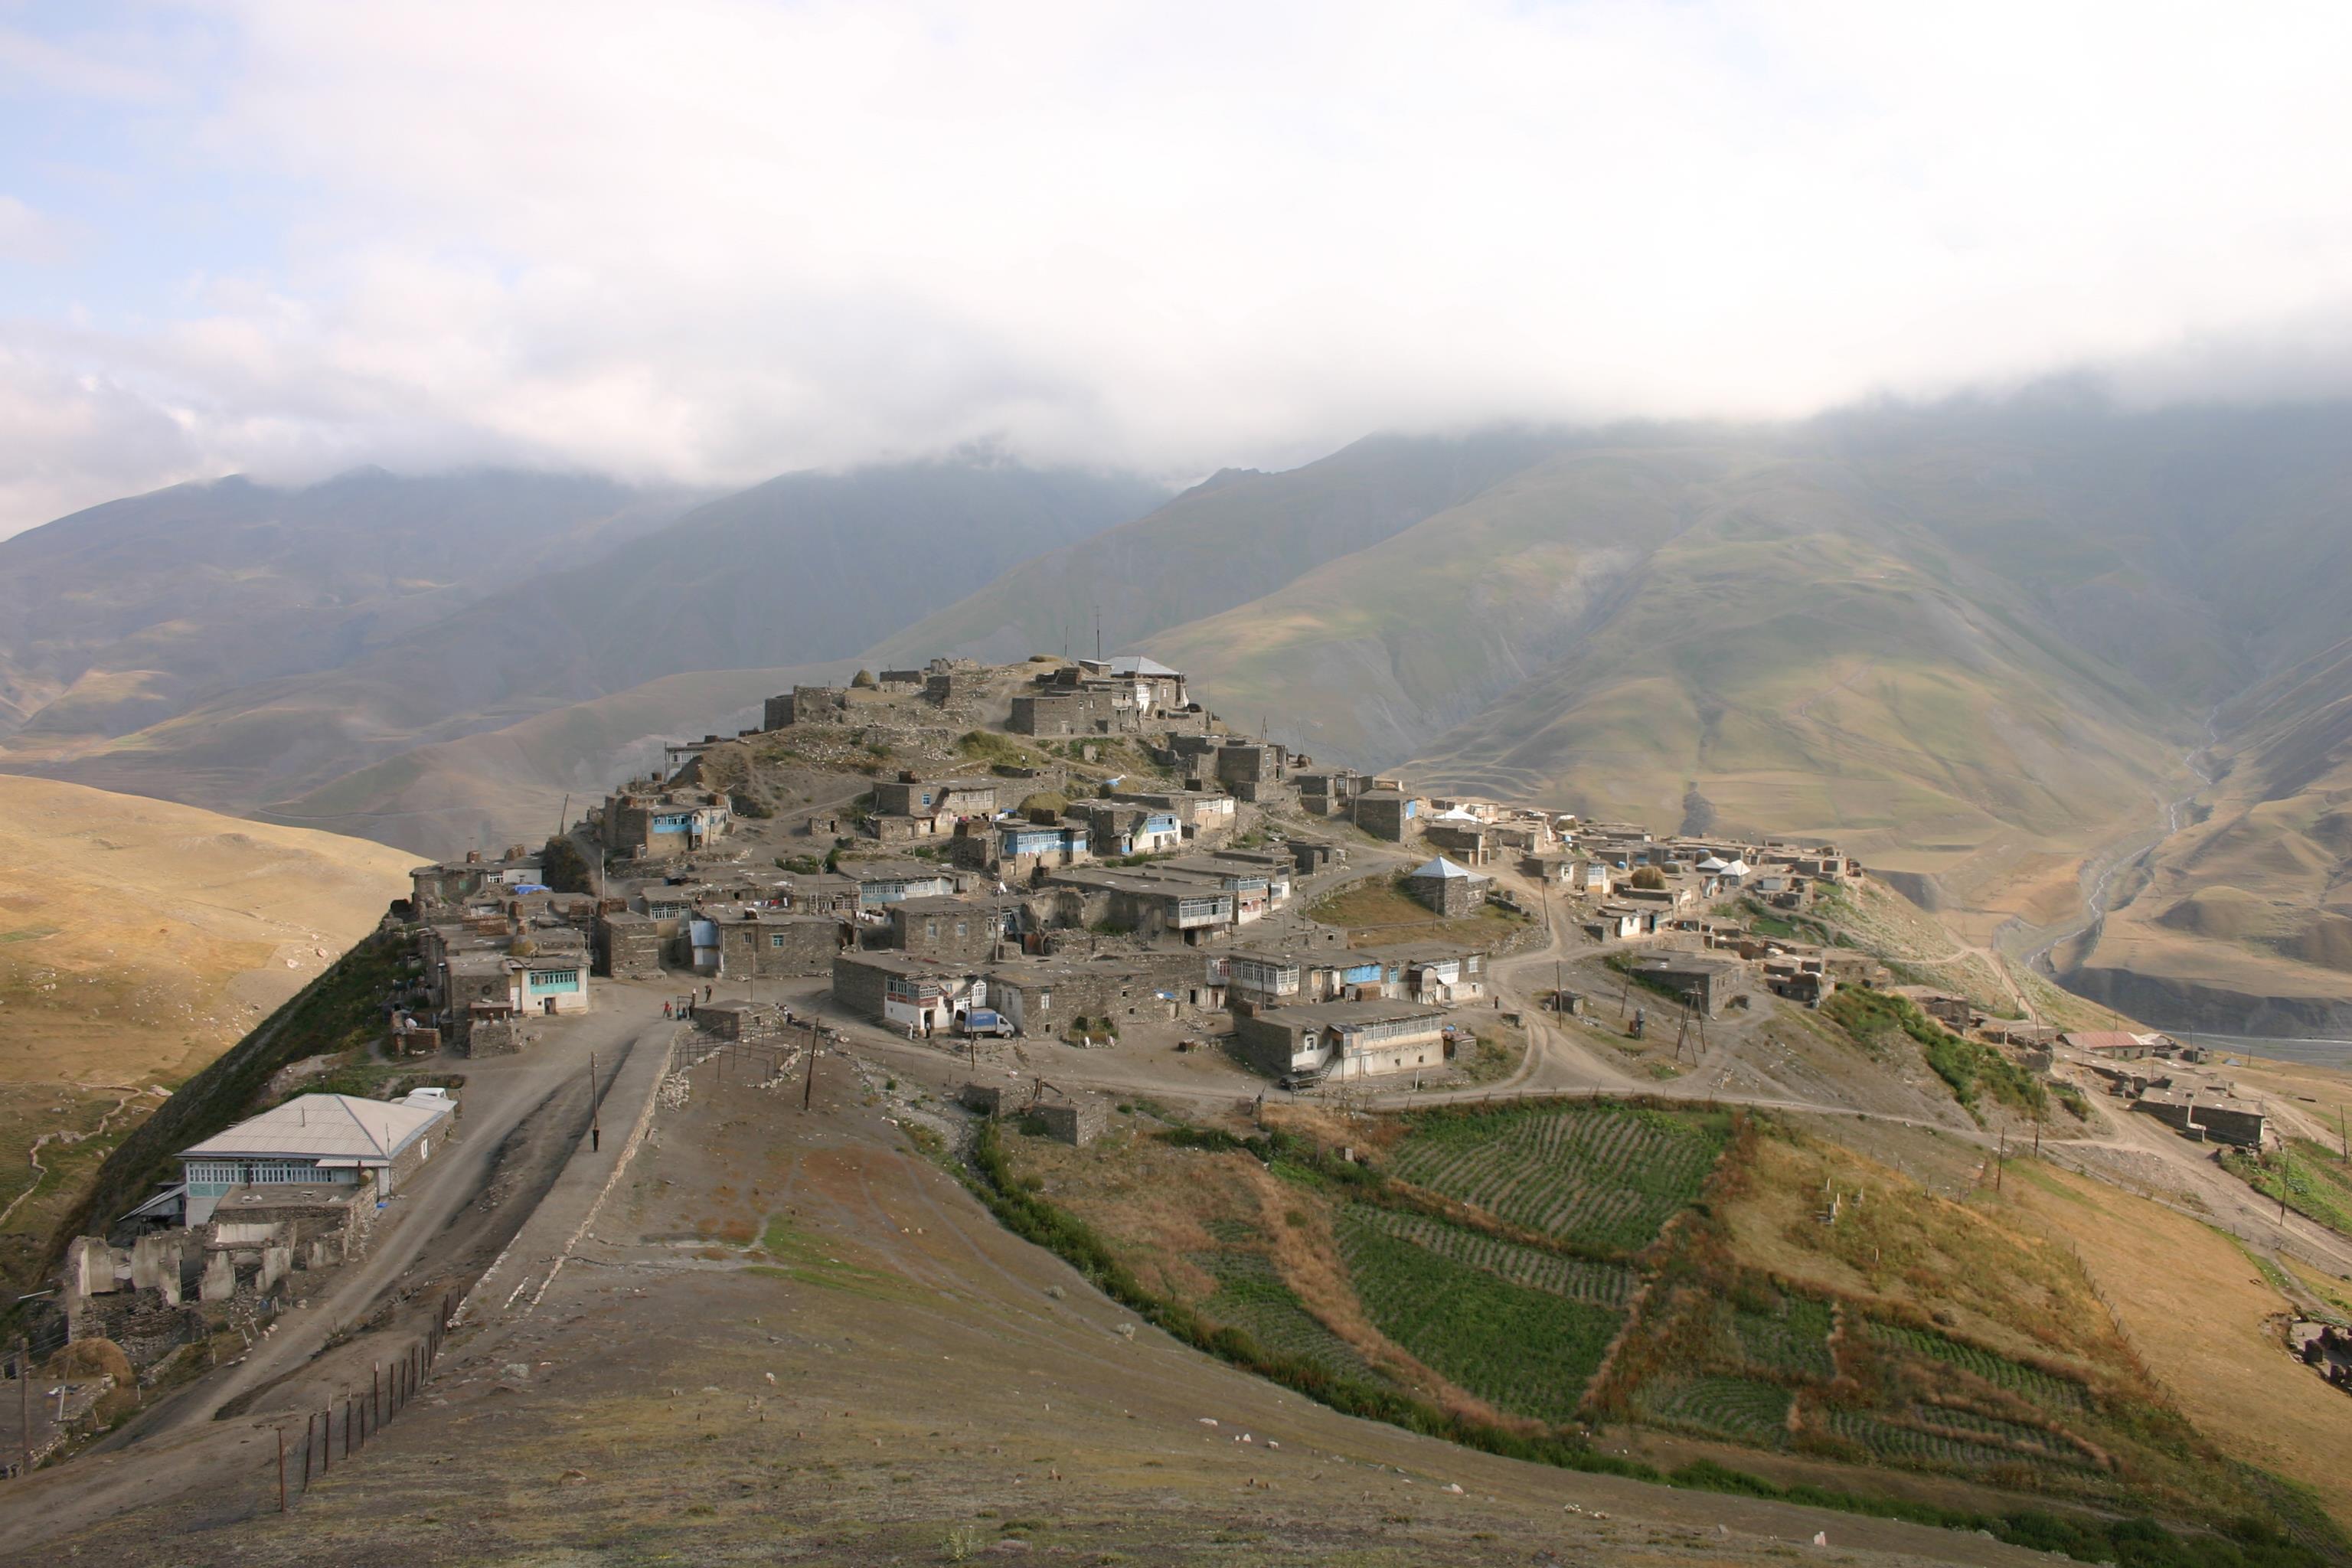 The Khinalig village in Azerbaijan